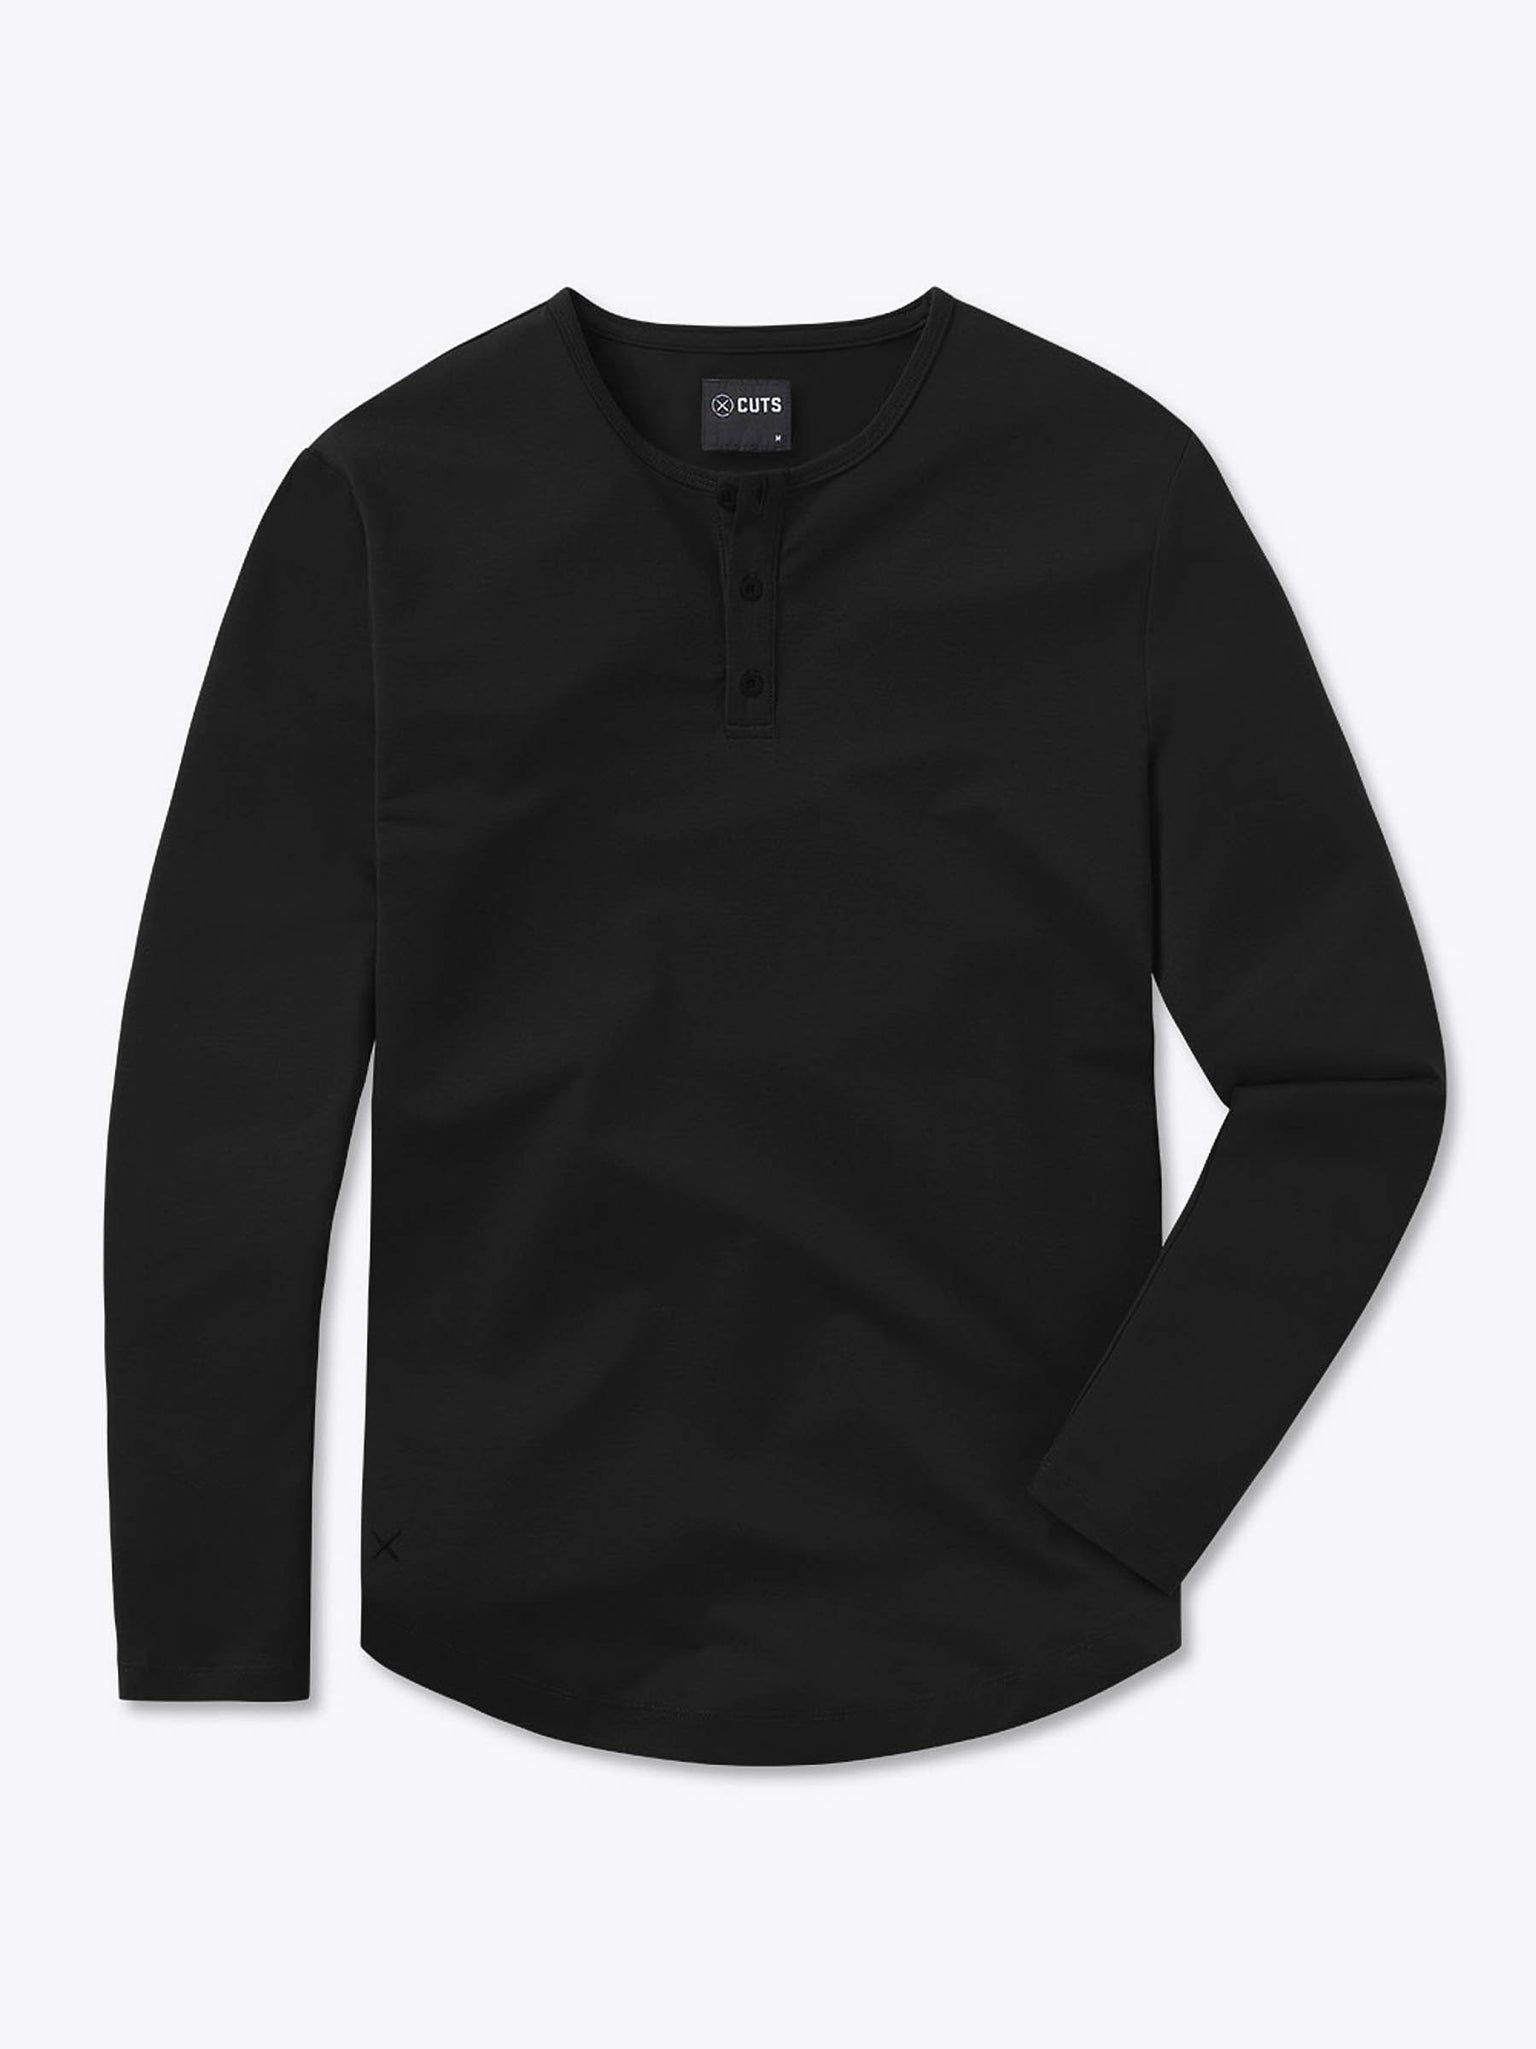 Stylish Black Long Sleeve Henley Shirt for Men